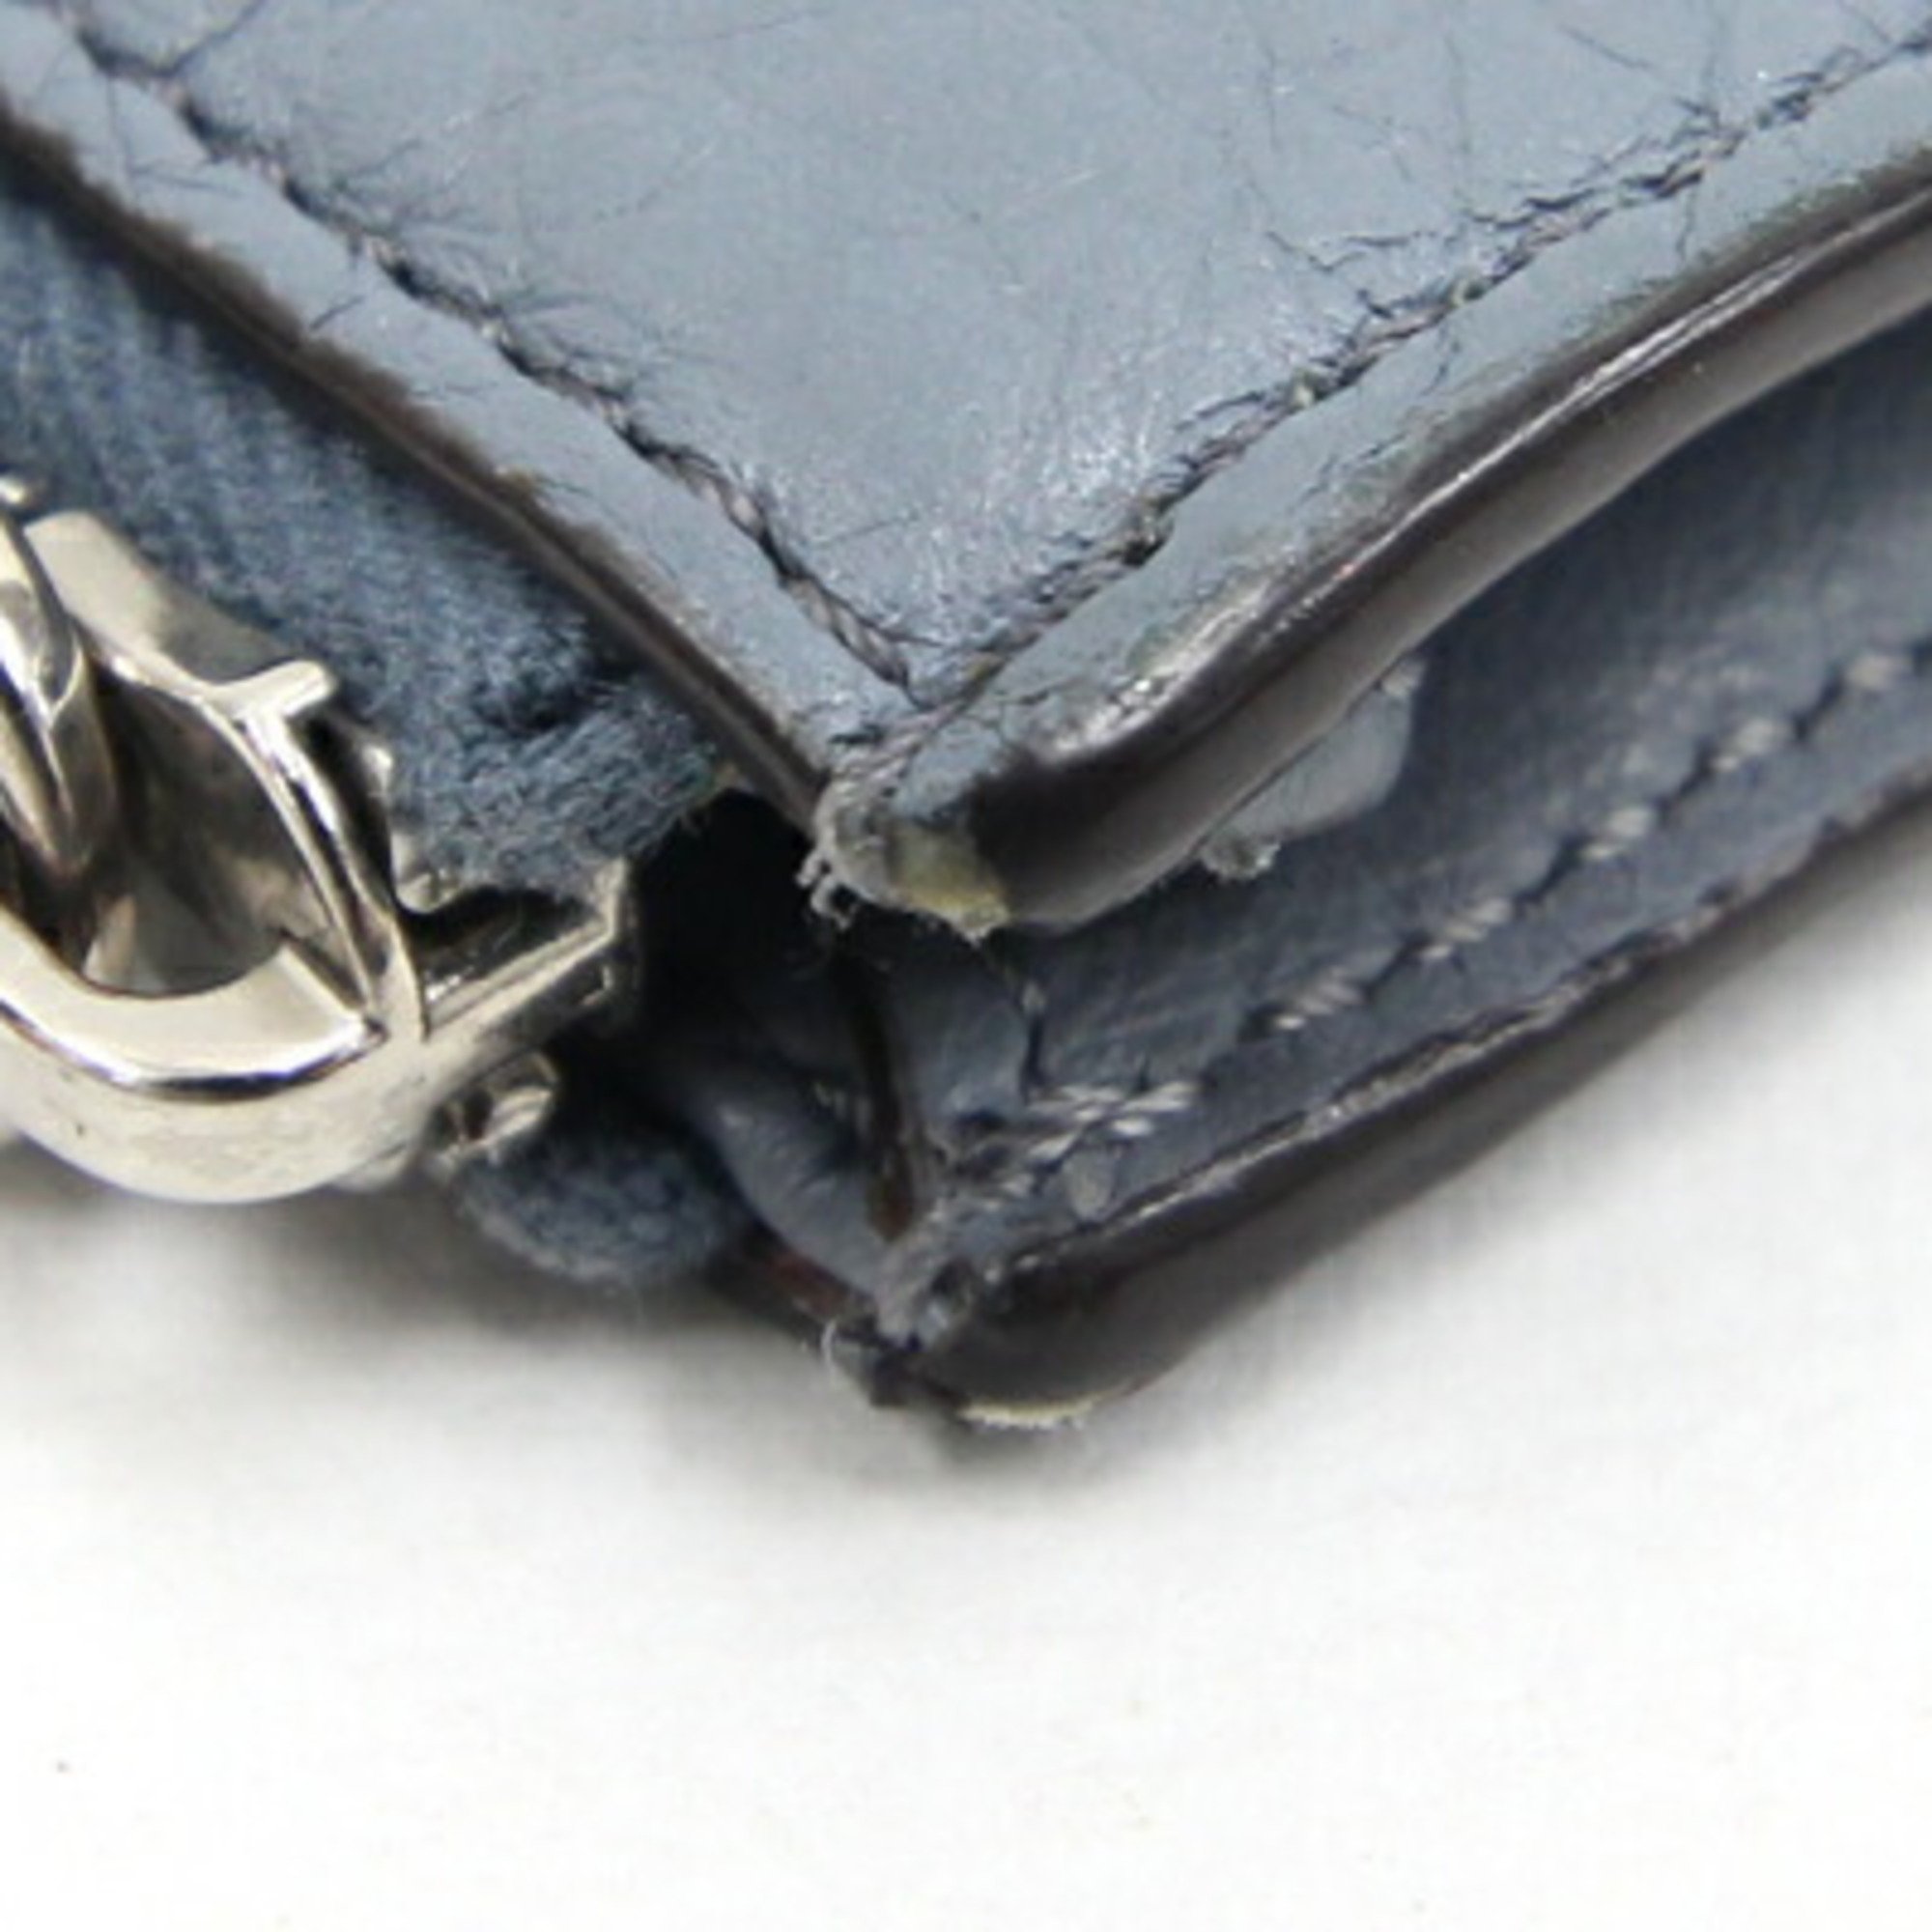 FENDI Coin Case Peekaboo Selleria 8AP161 Blue Gray Leather Card Holder Key Ring Wallet Women's